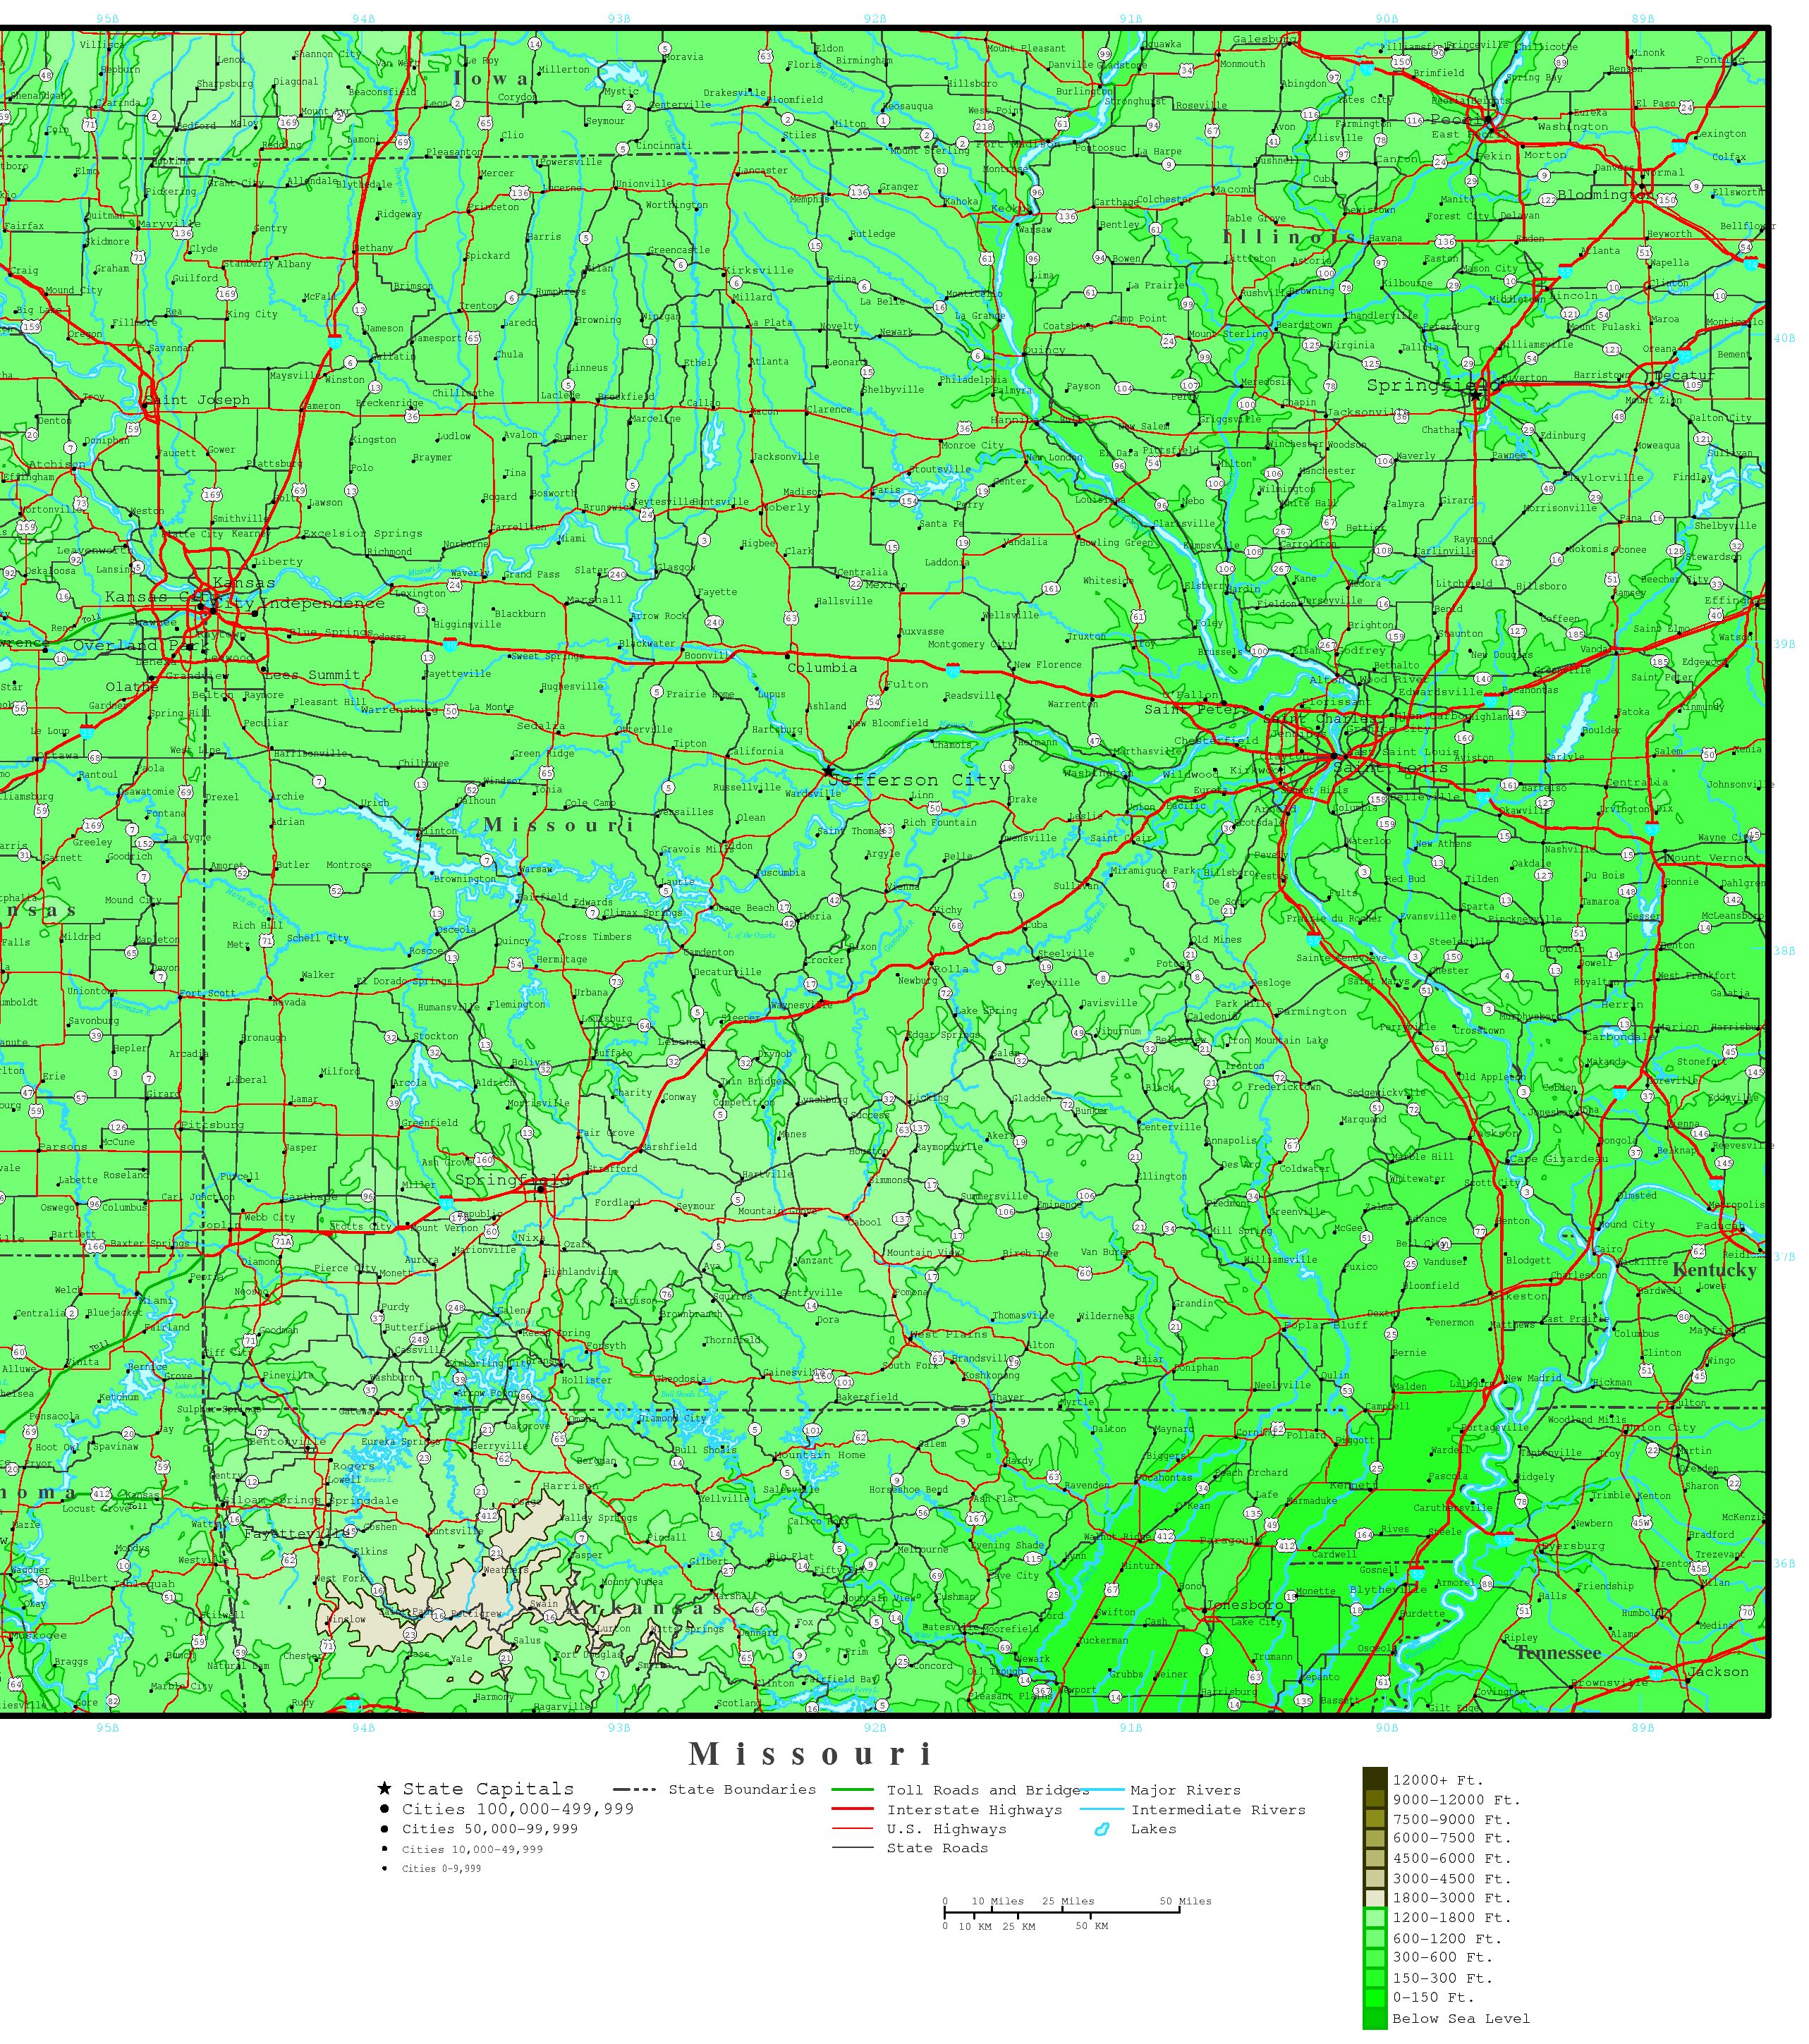 Missouri Elevation Map